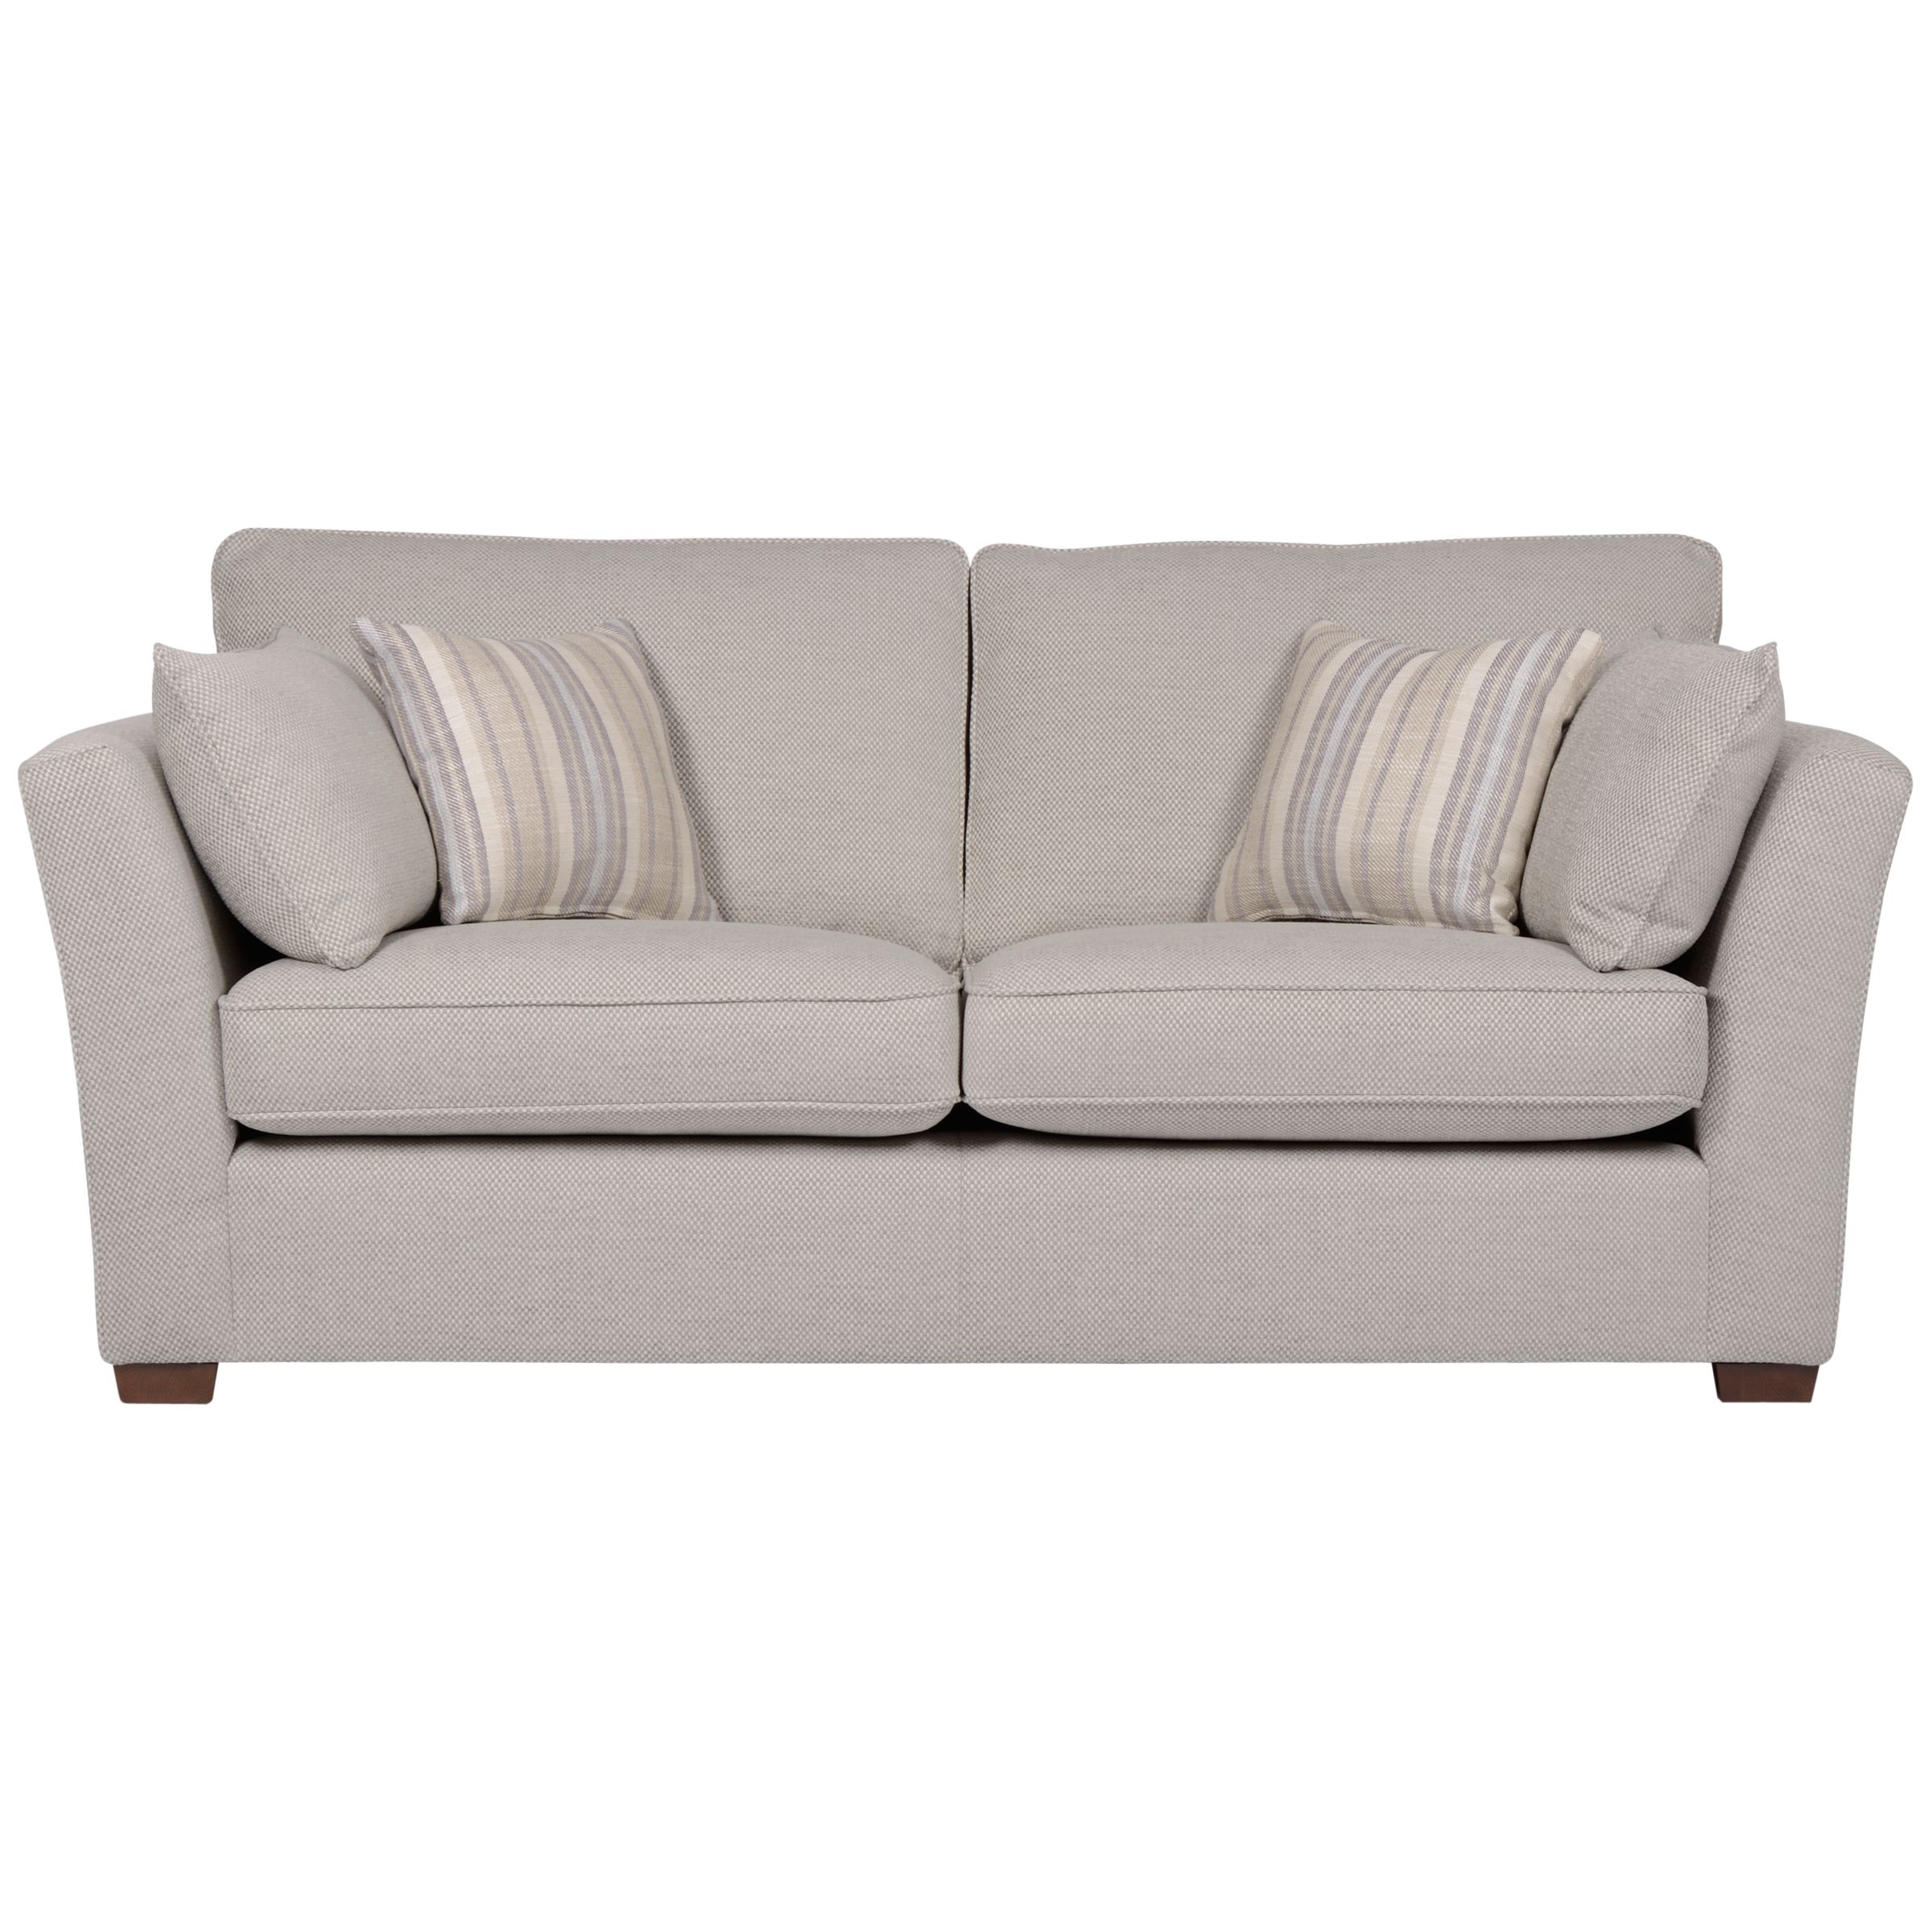 John Lewis Nantes Large Sofa, Evora Grey, width 195cm